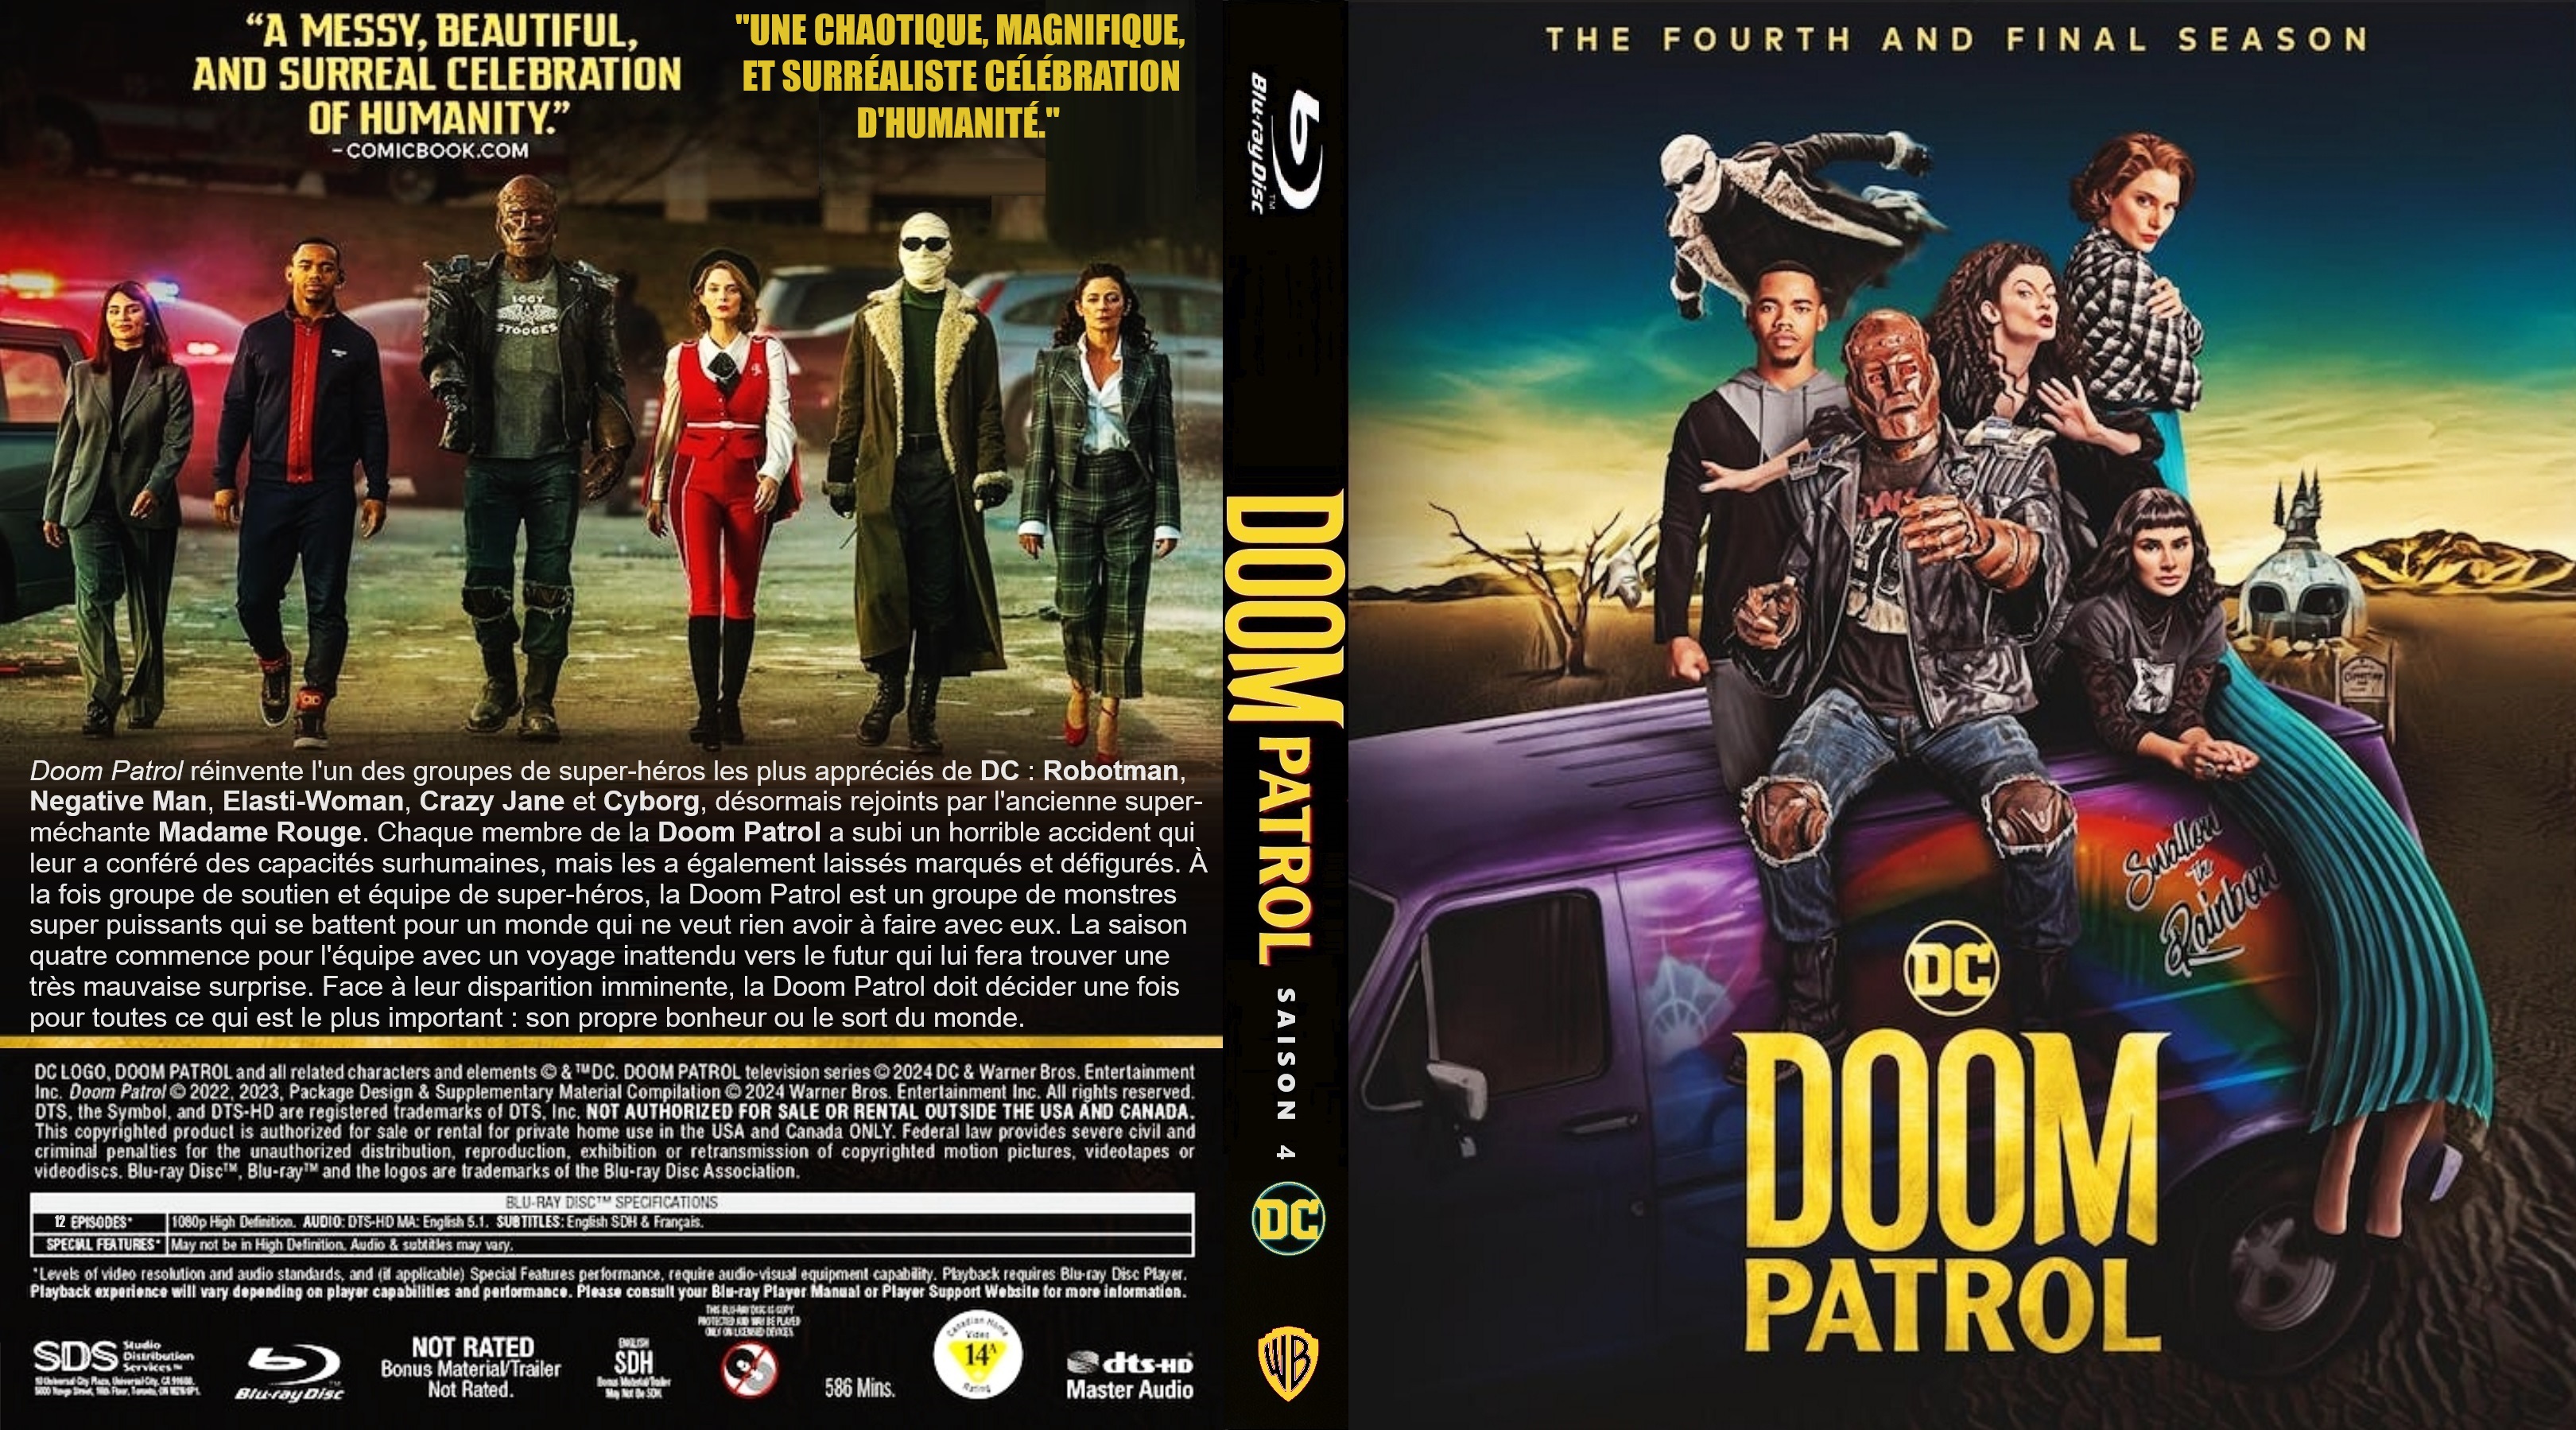 Jaquette DVD Doom Patrol saison 4 custom (BLU-RAY) v2